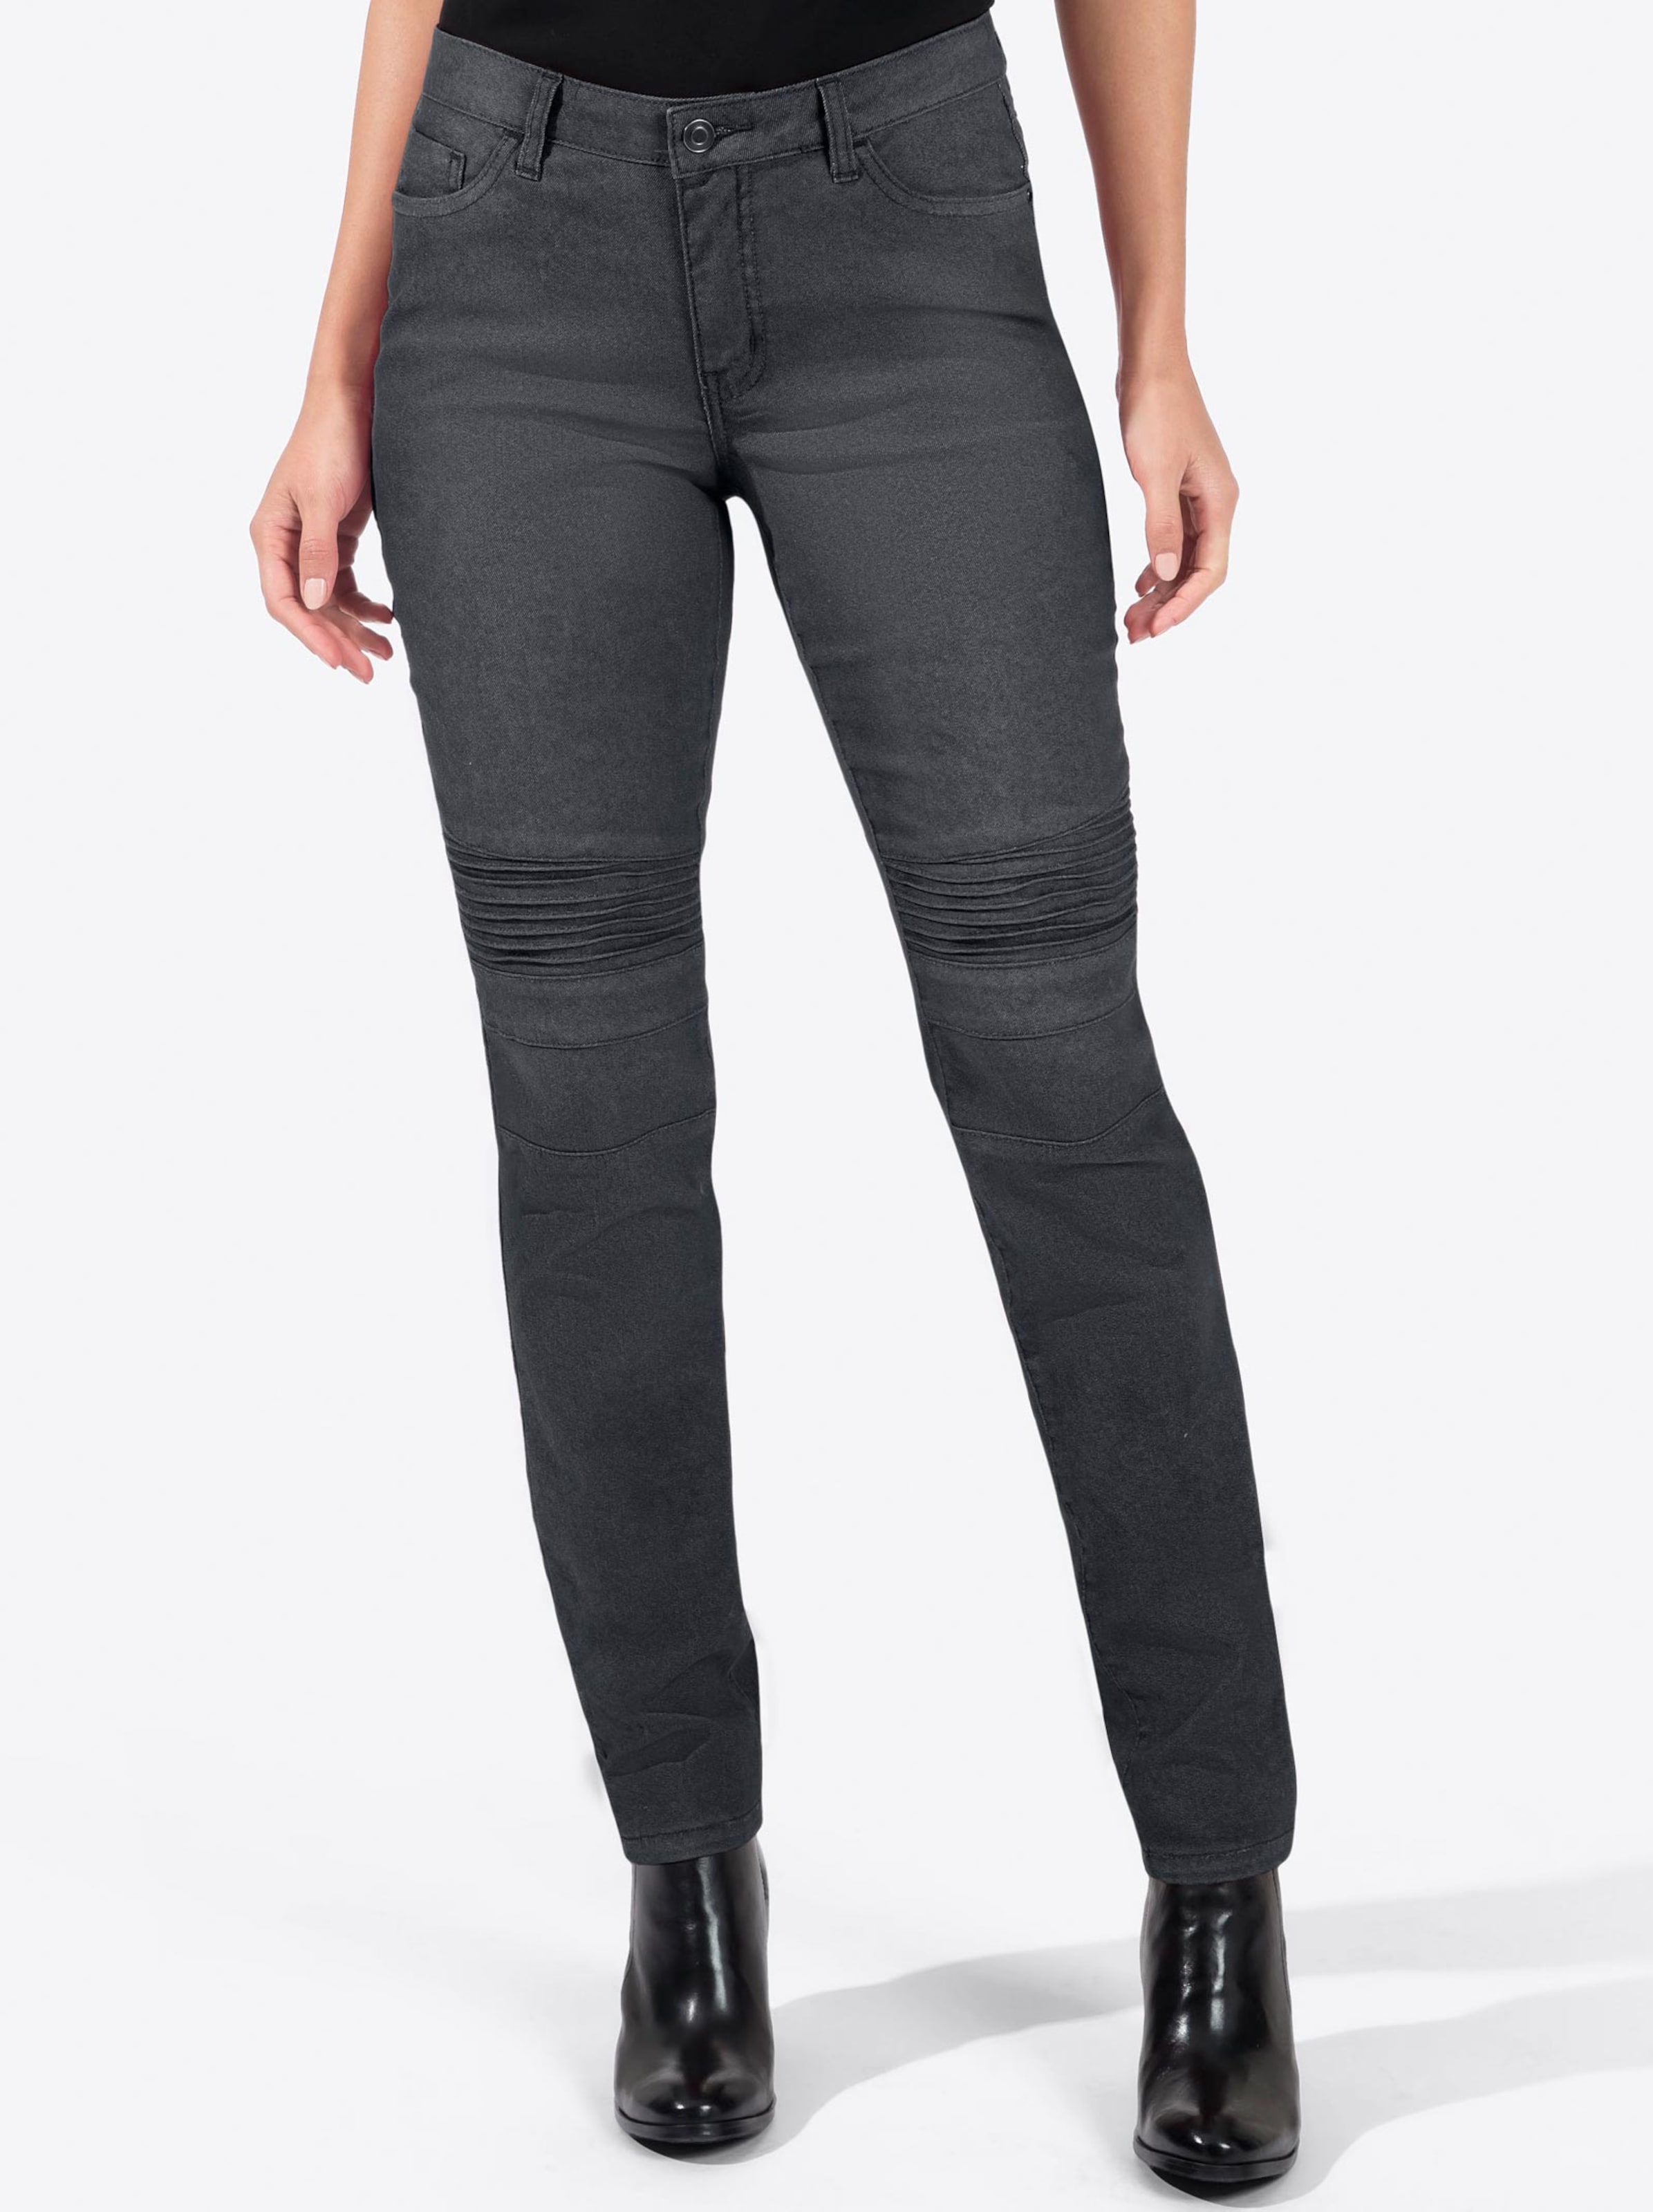 Damenmode Jeans Jeans in black-denim 